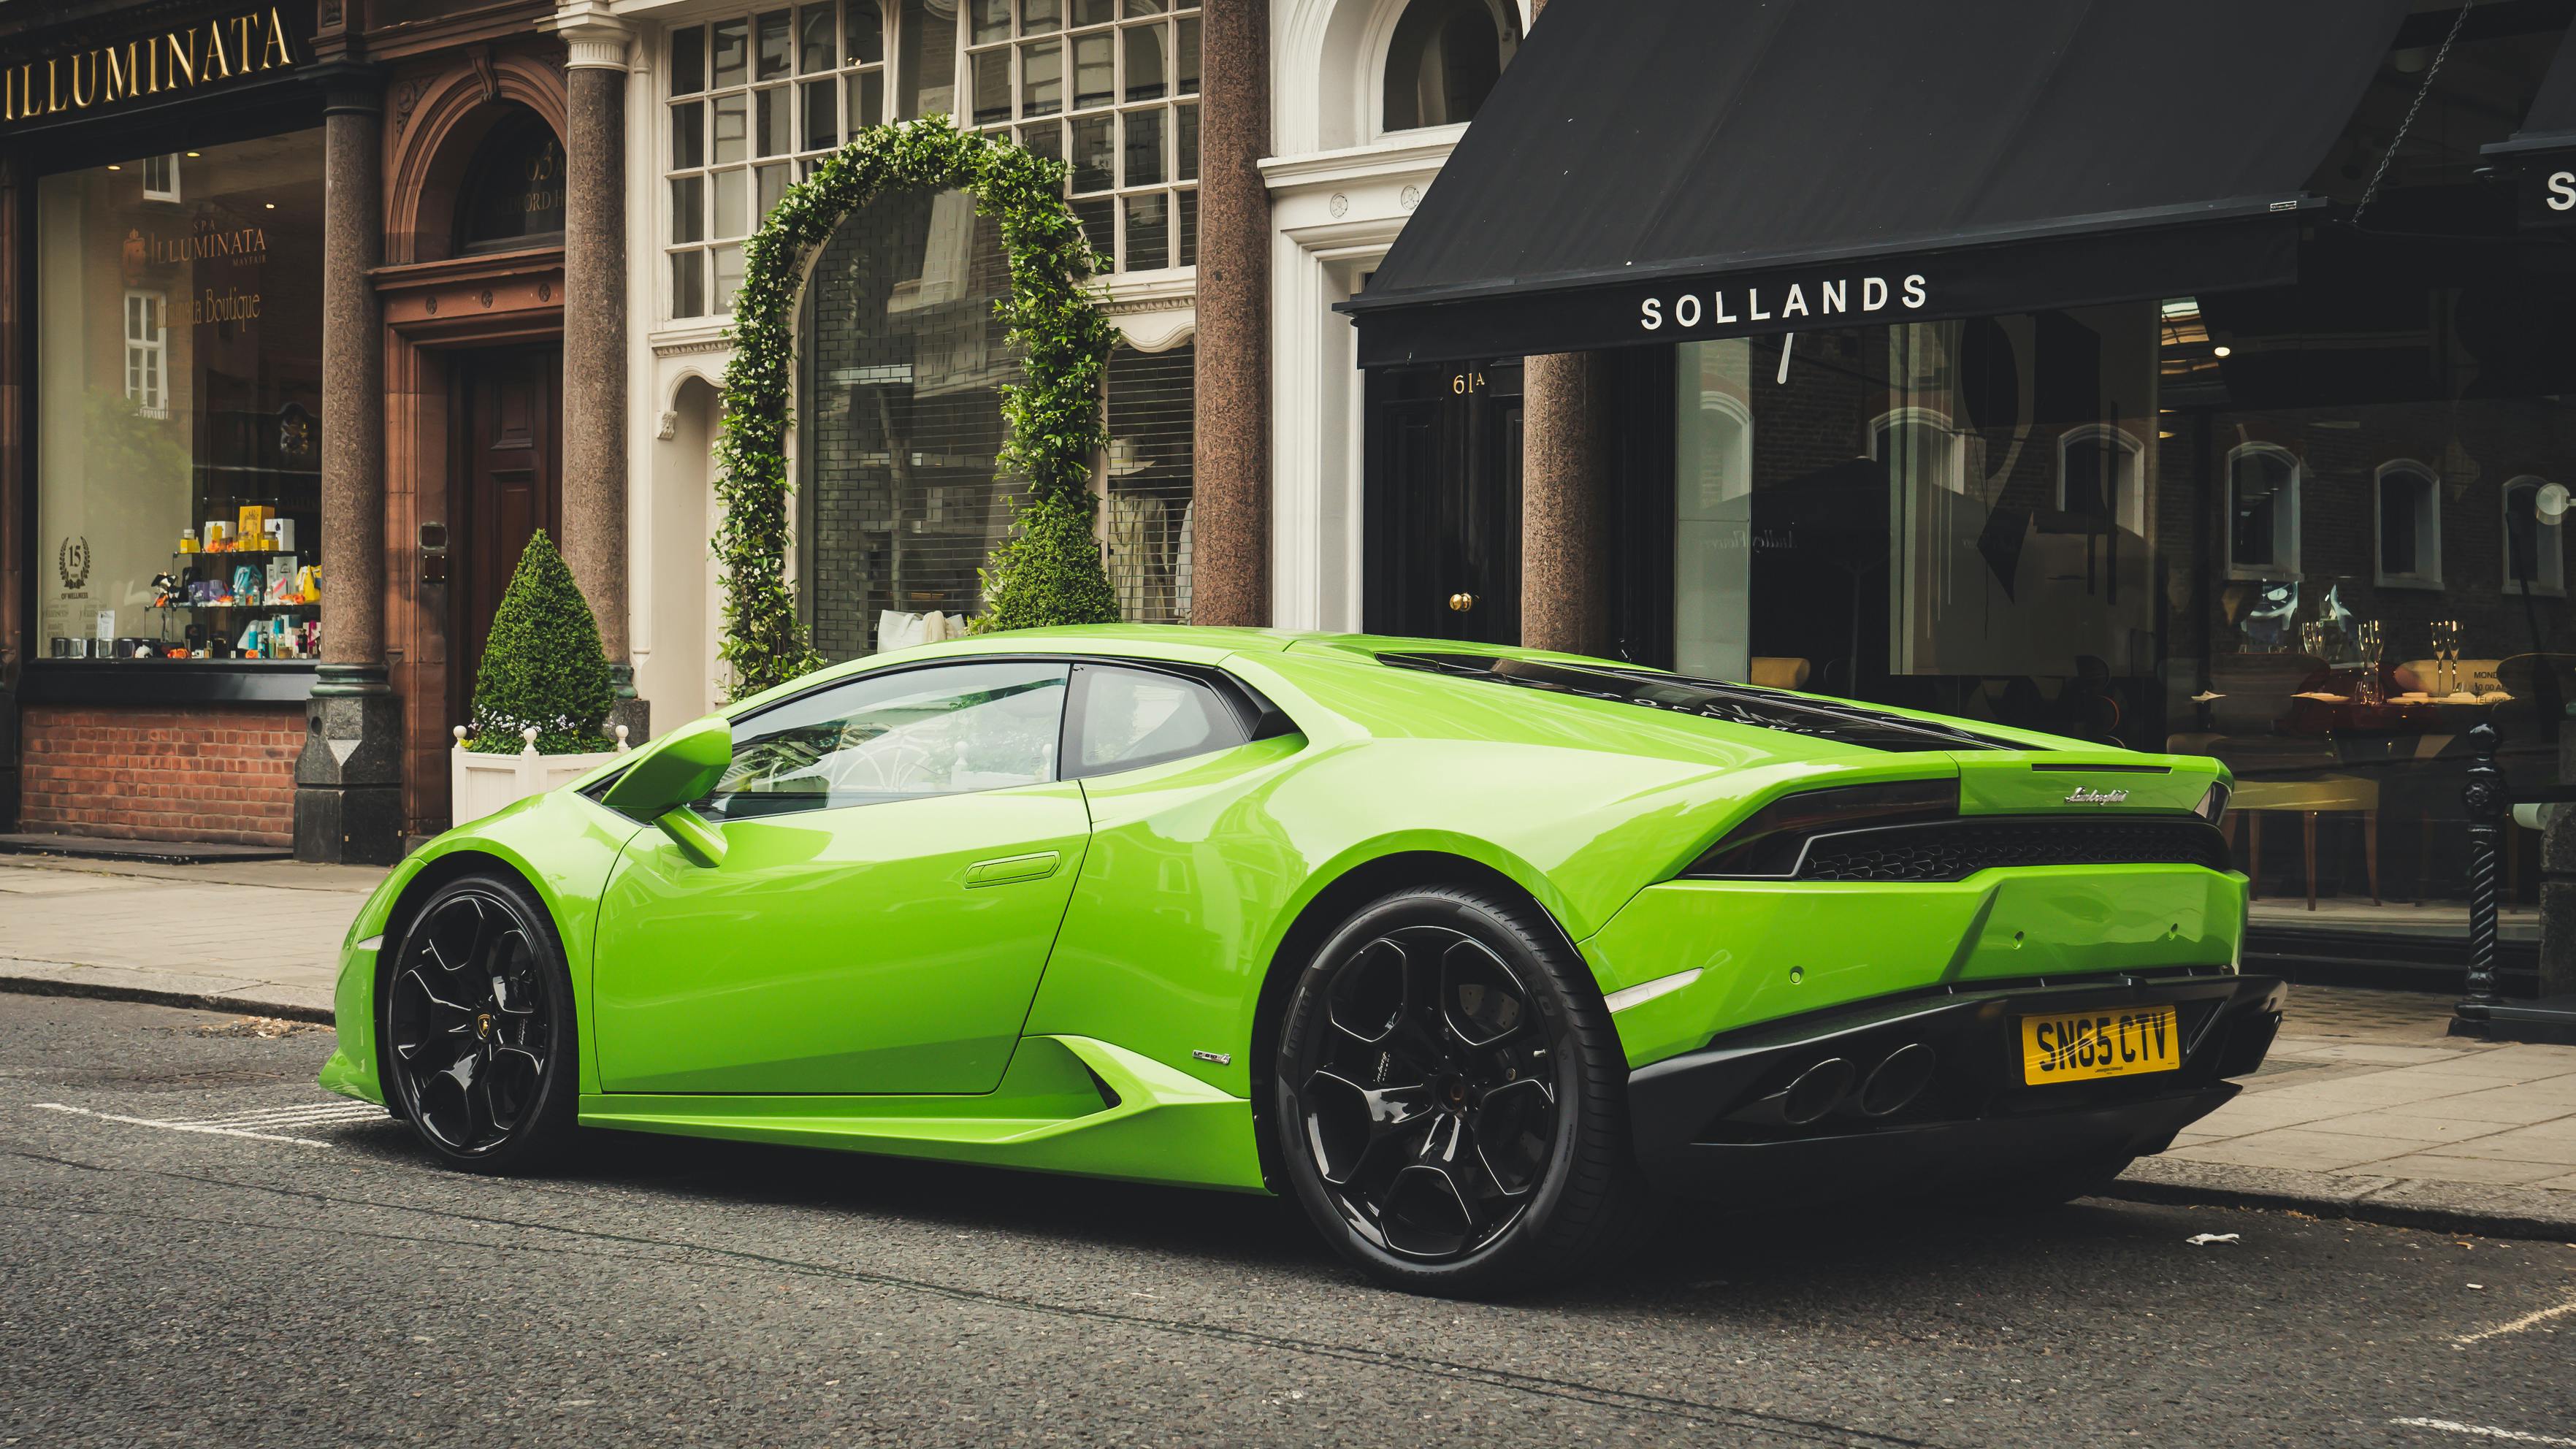 Download Free Lamborghini Stock Photos